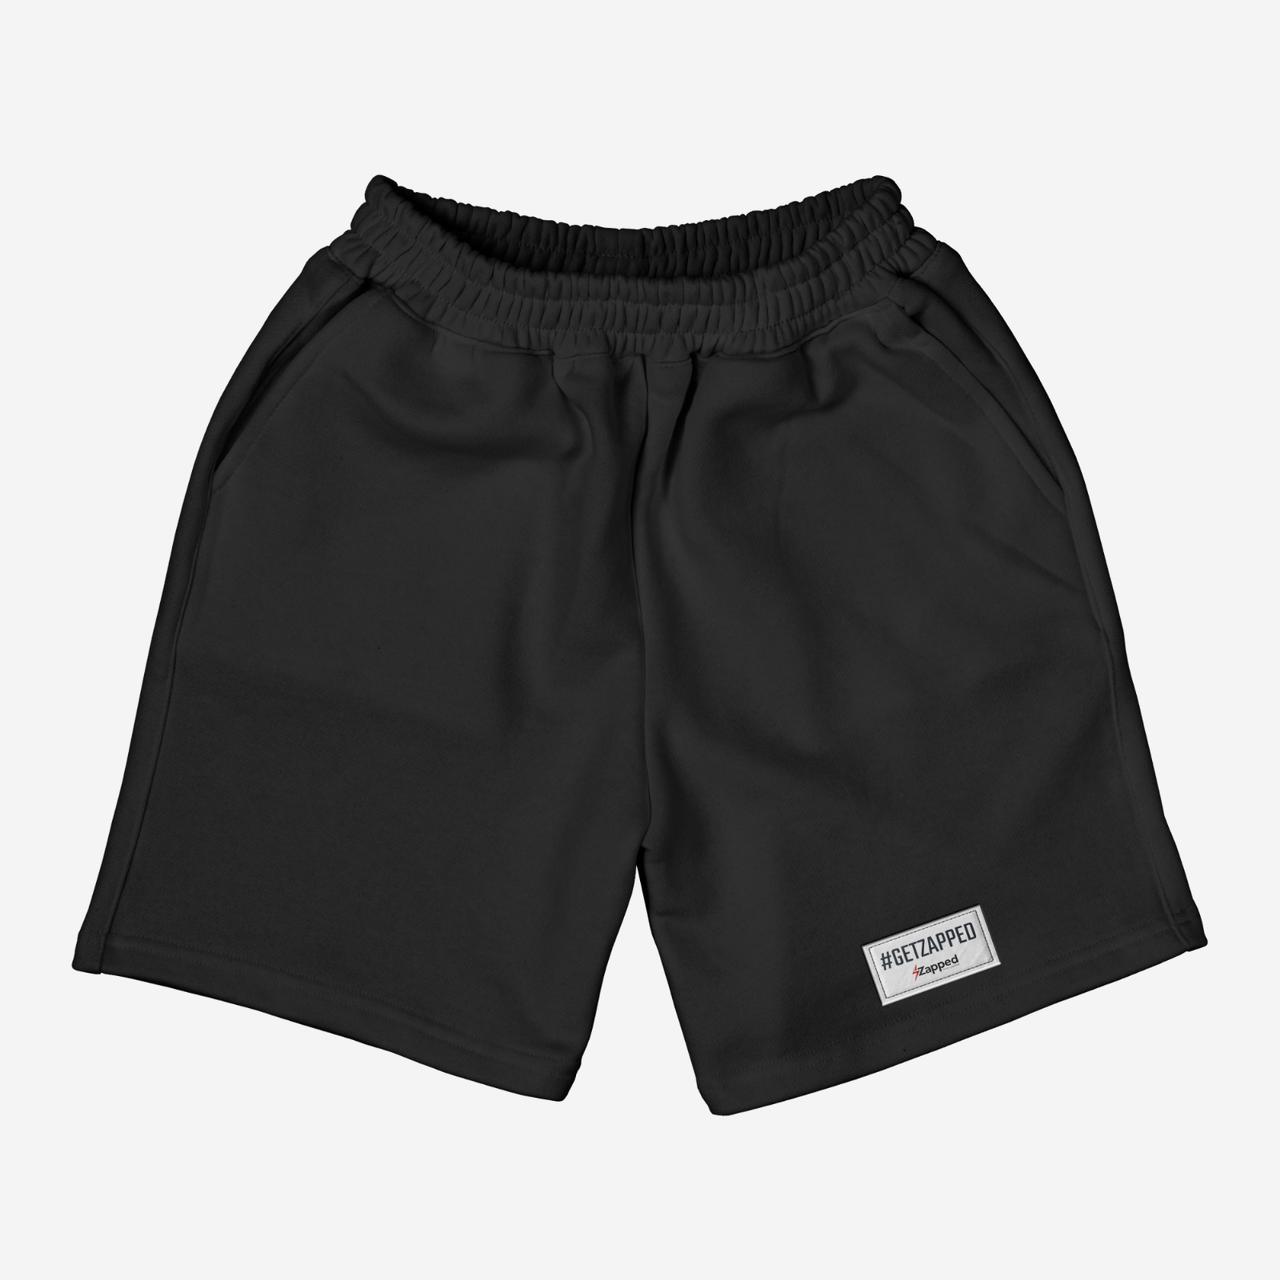 Zapped Black Basic Mesh Shorts